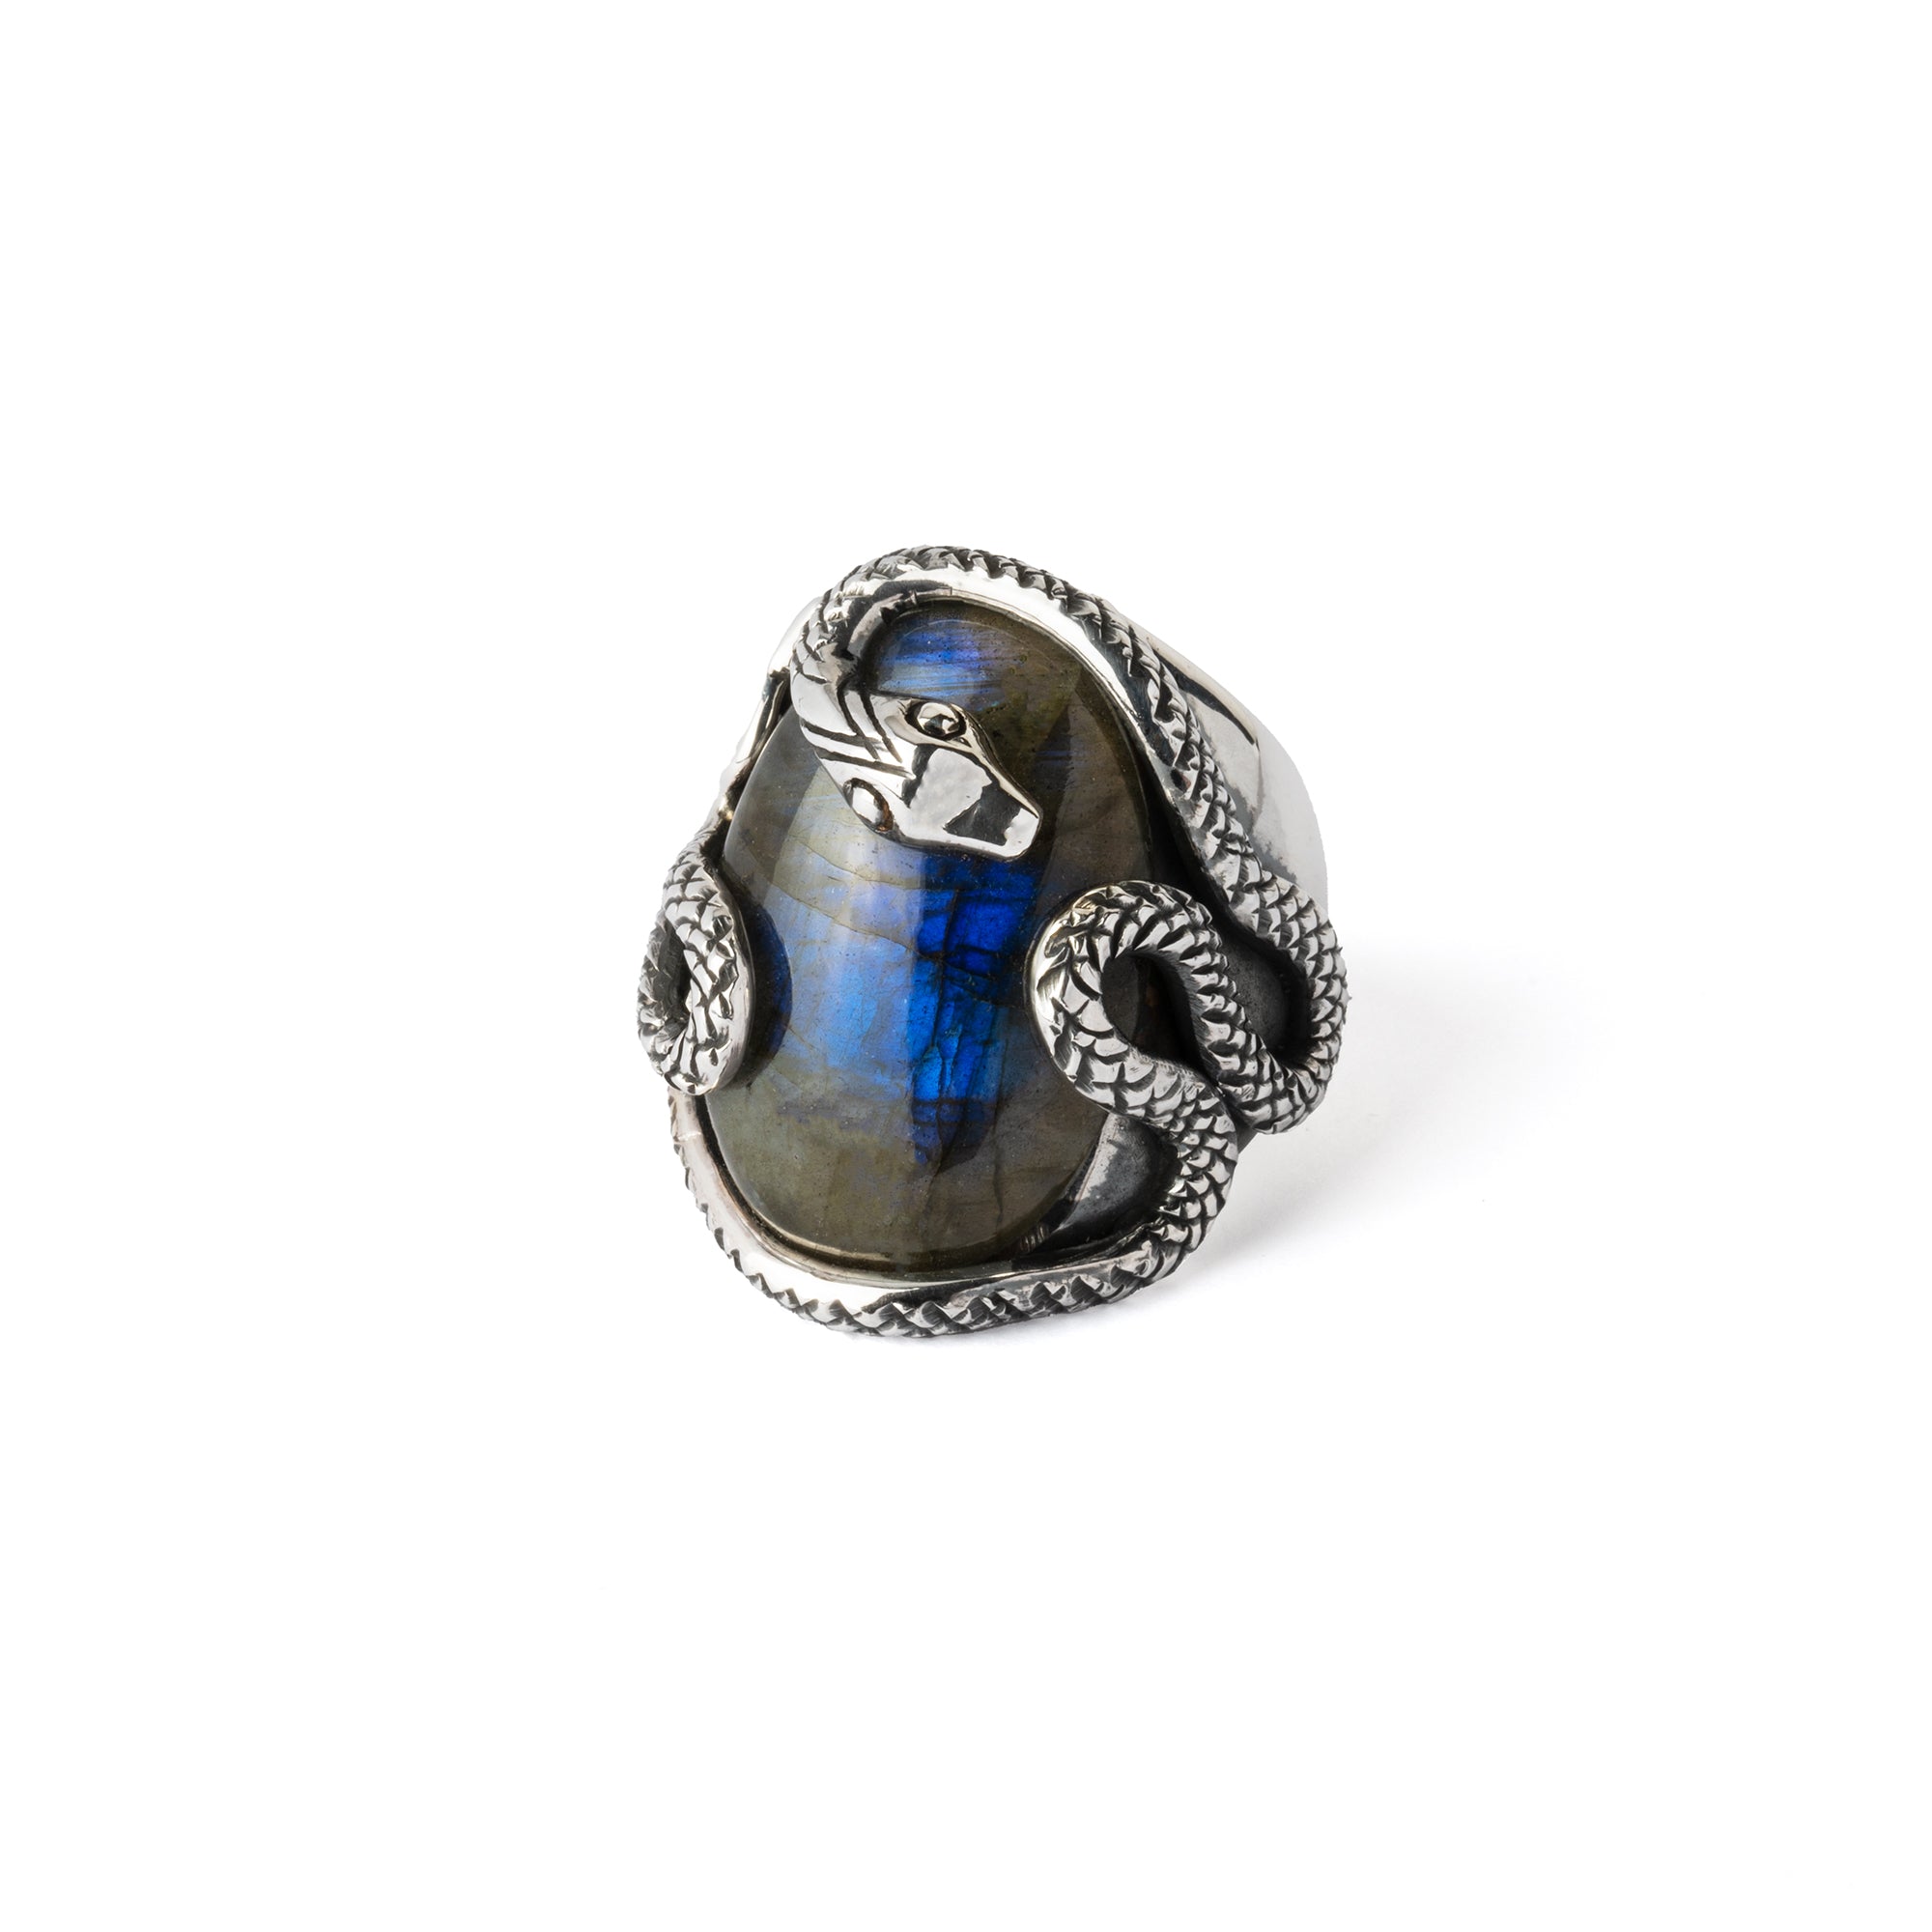 Hallmarked Silver Snake Ring with Labradorite